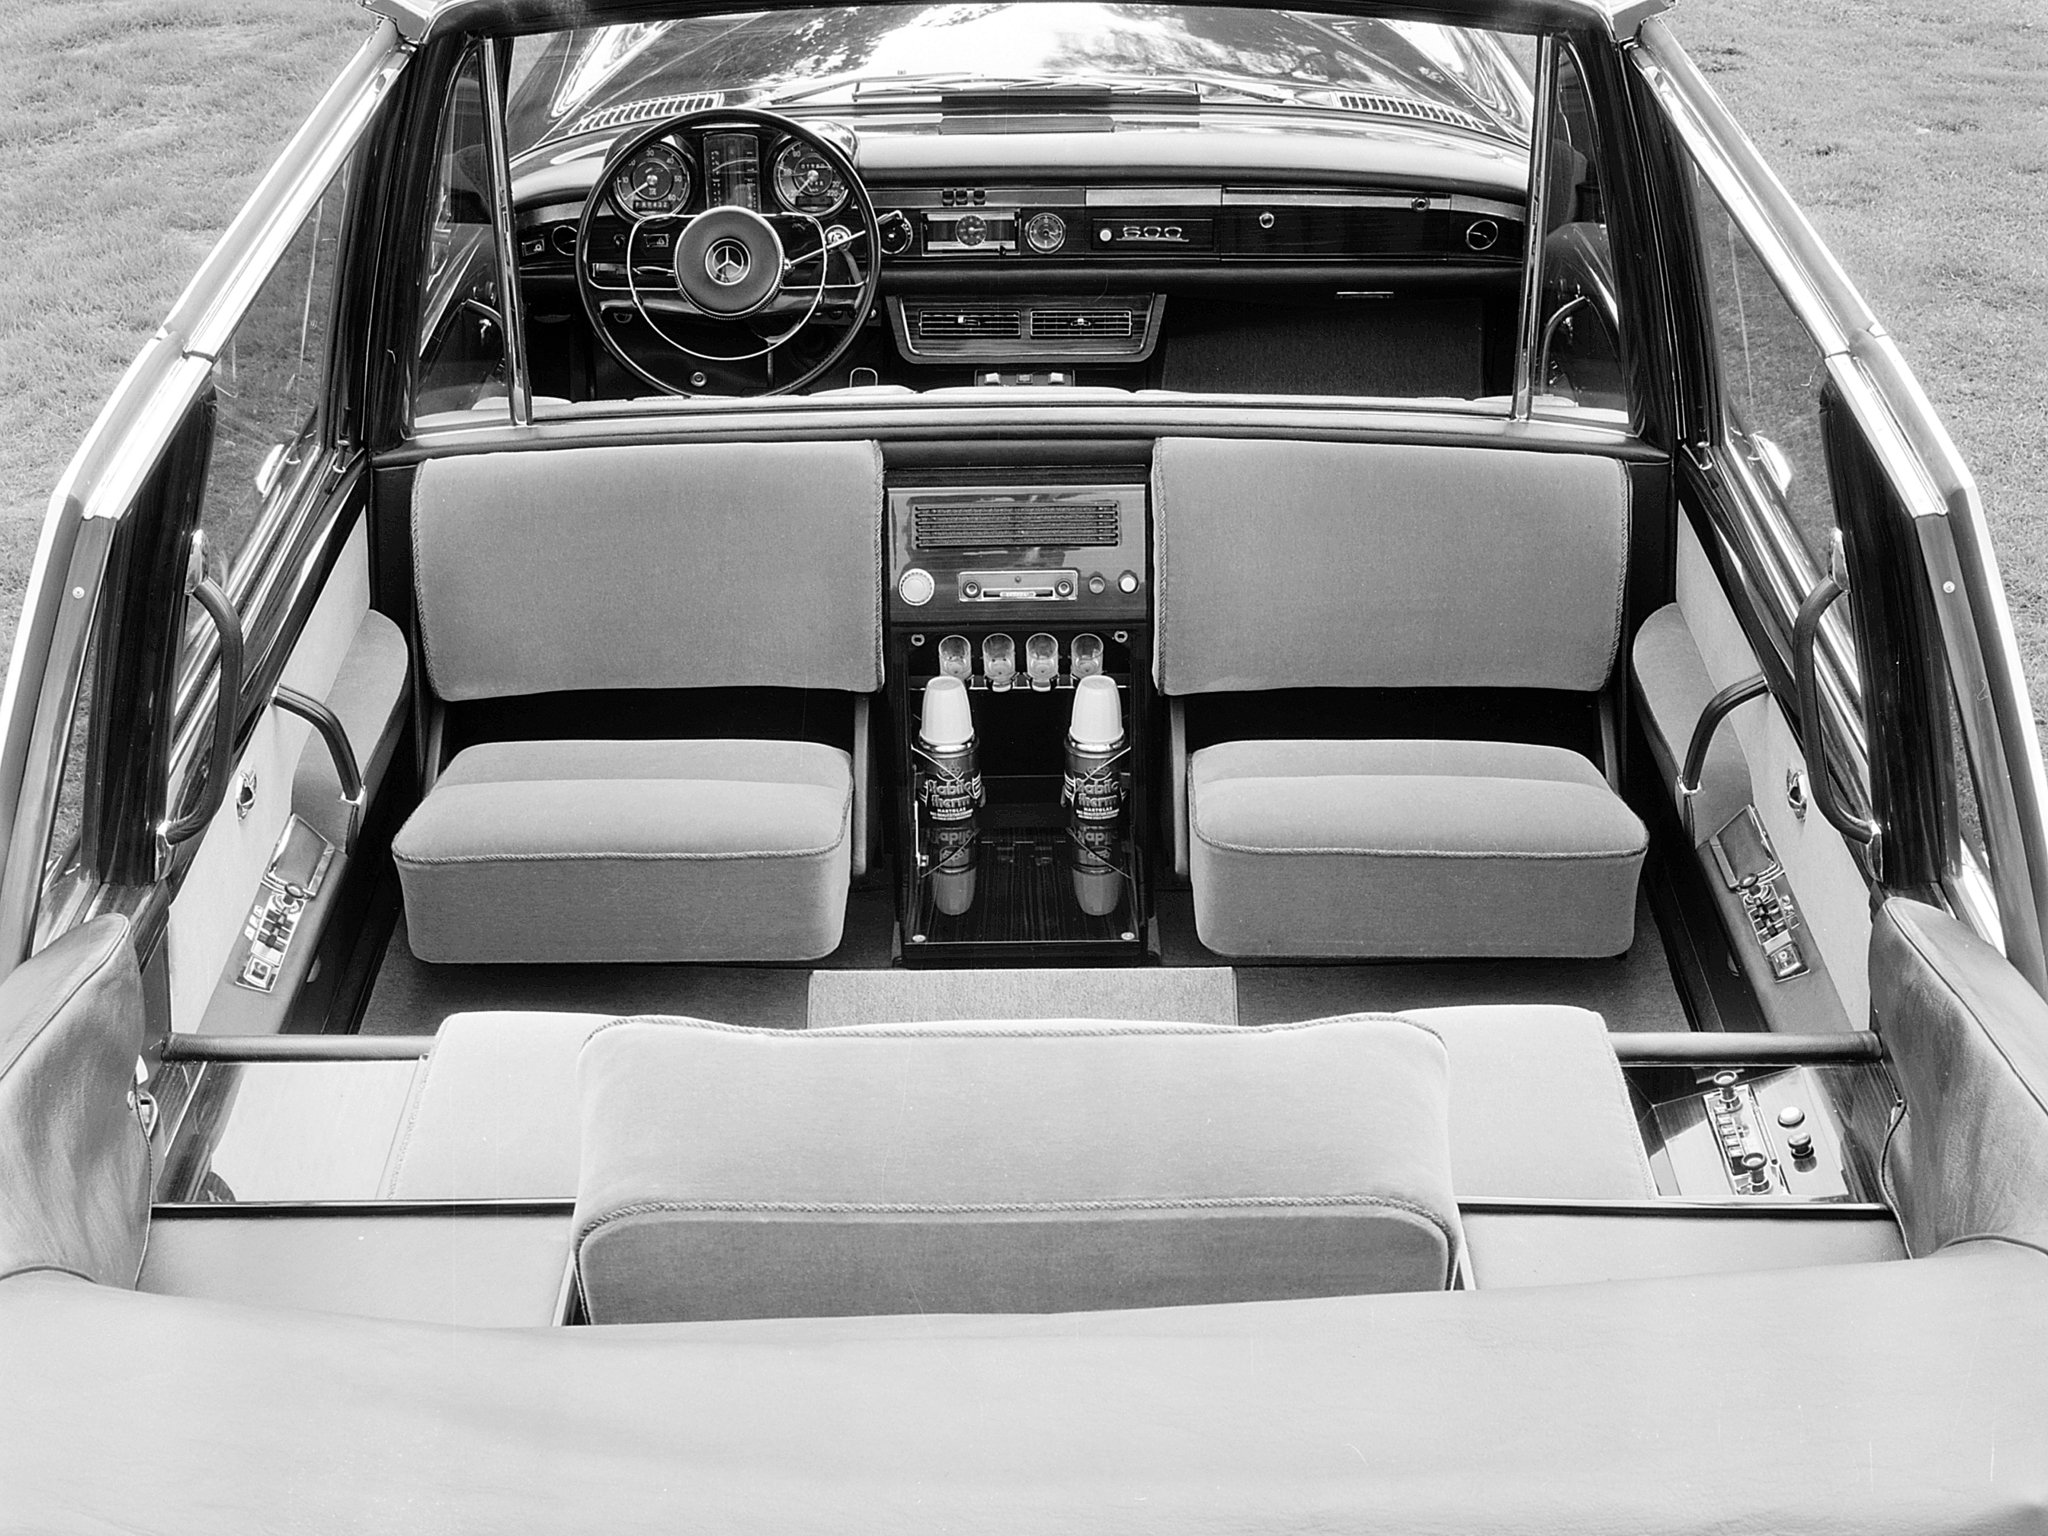 mercedes, Benz, 600, Pullman, Landaulet, Popemobile, Black, Classic, Cars, 1965 Wallpaper